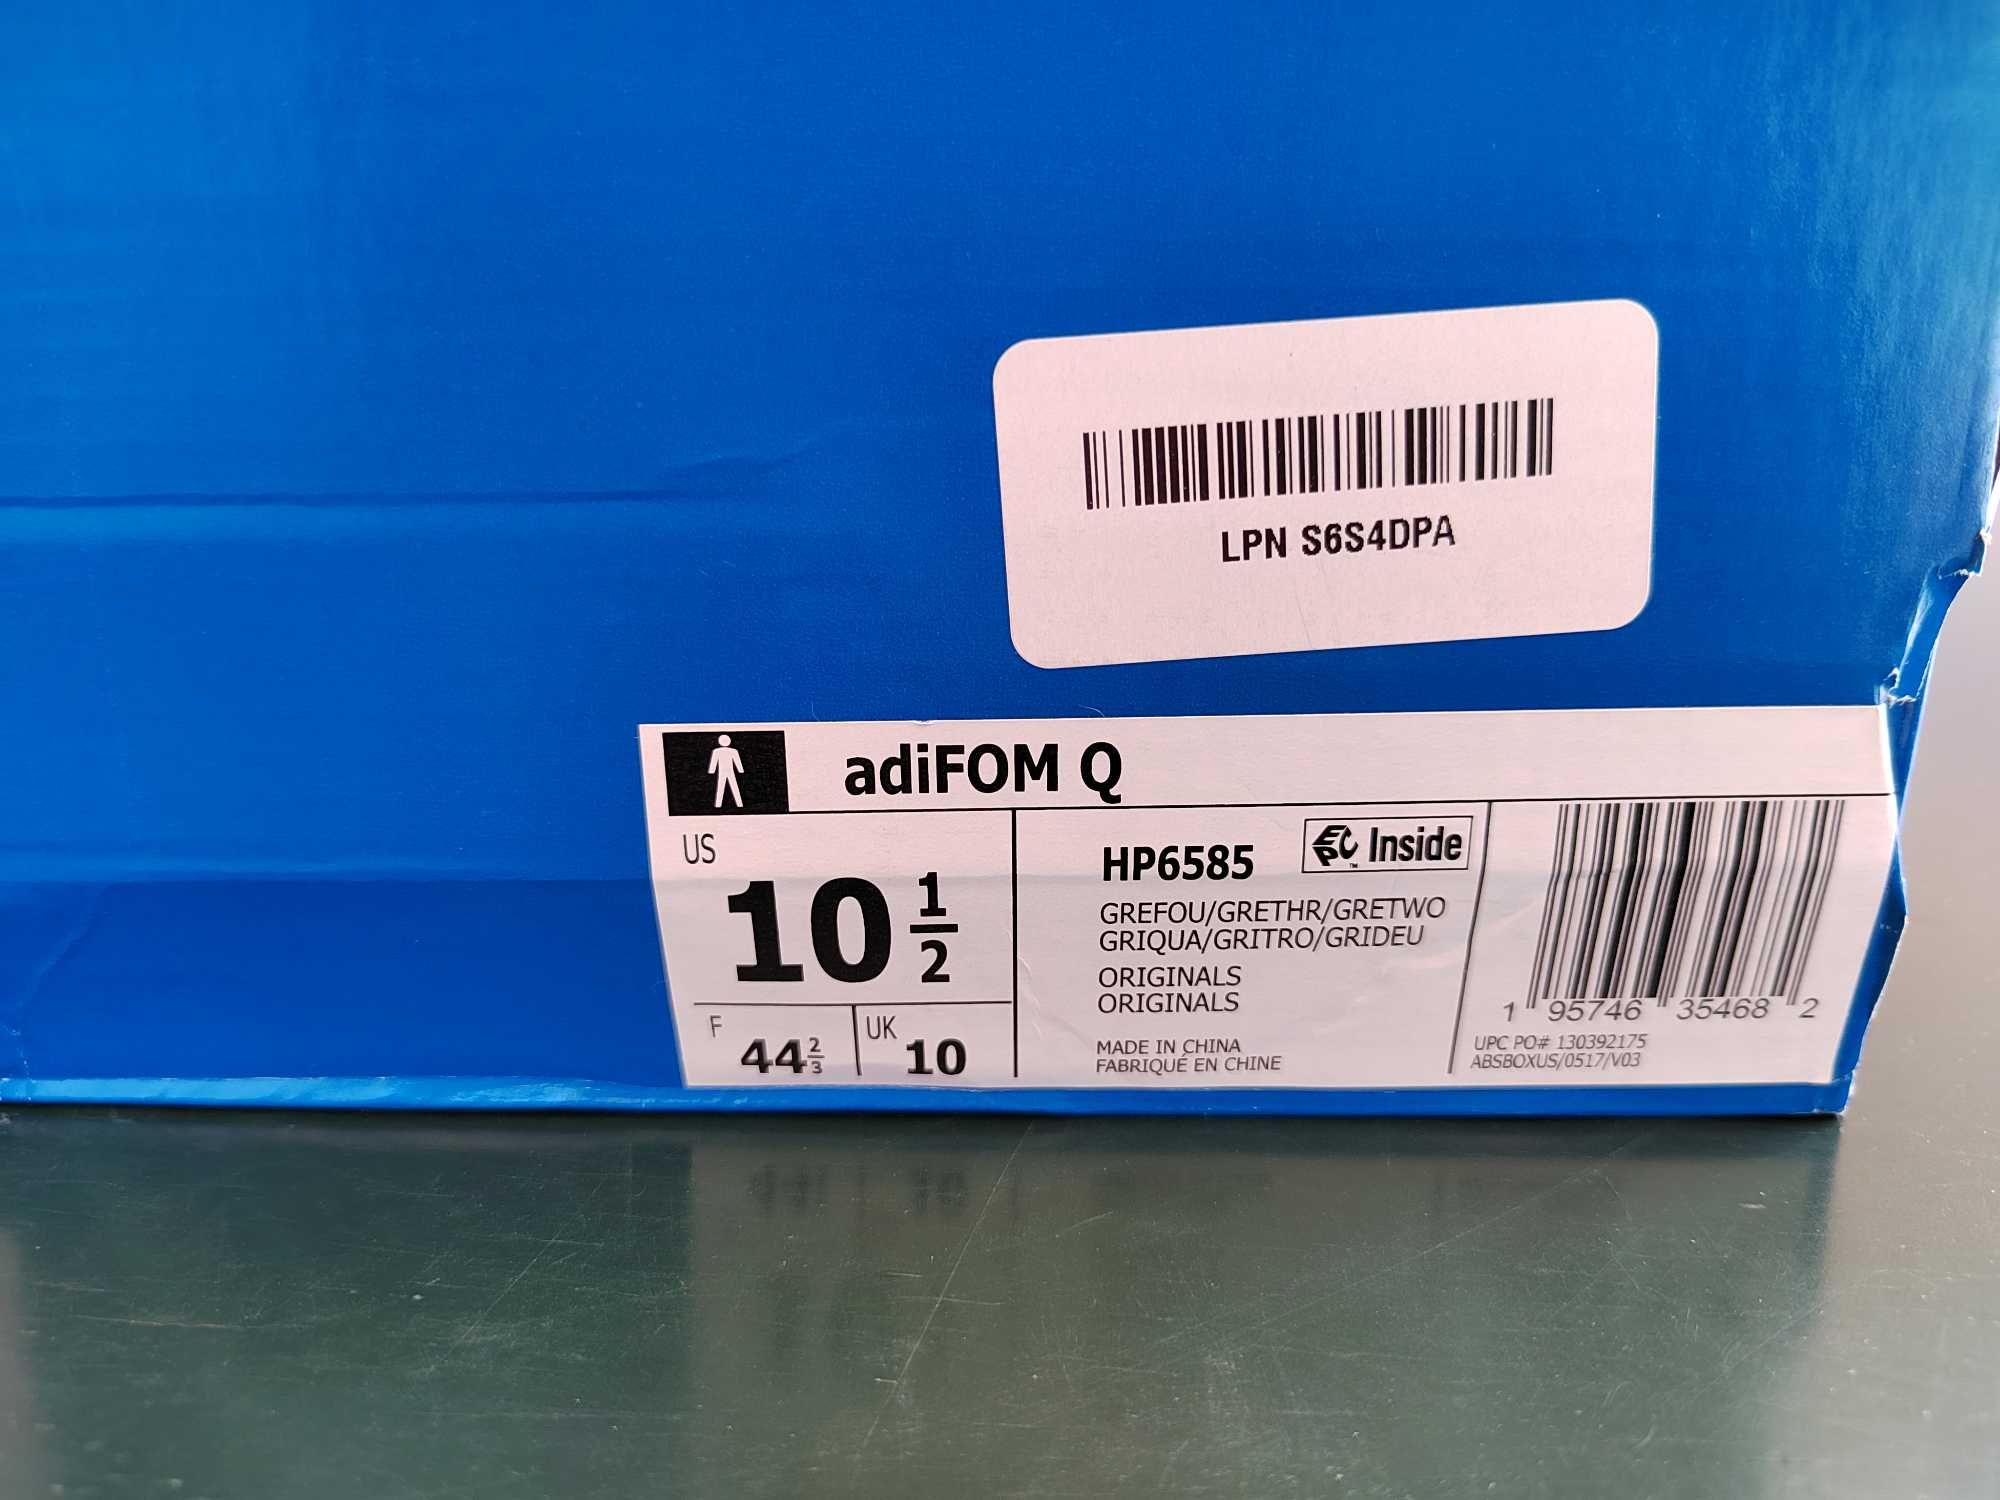 Кроссовки Adidas AdiFOM Q Black Carbon Grey HP6585 Yeezy Like